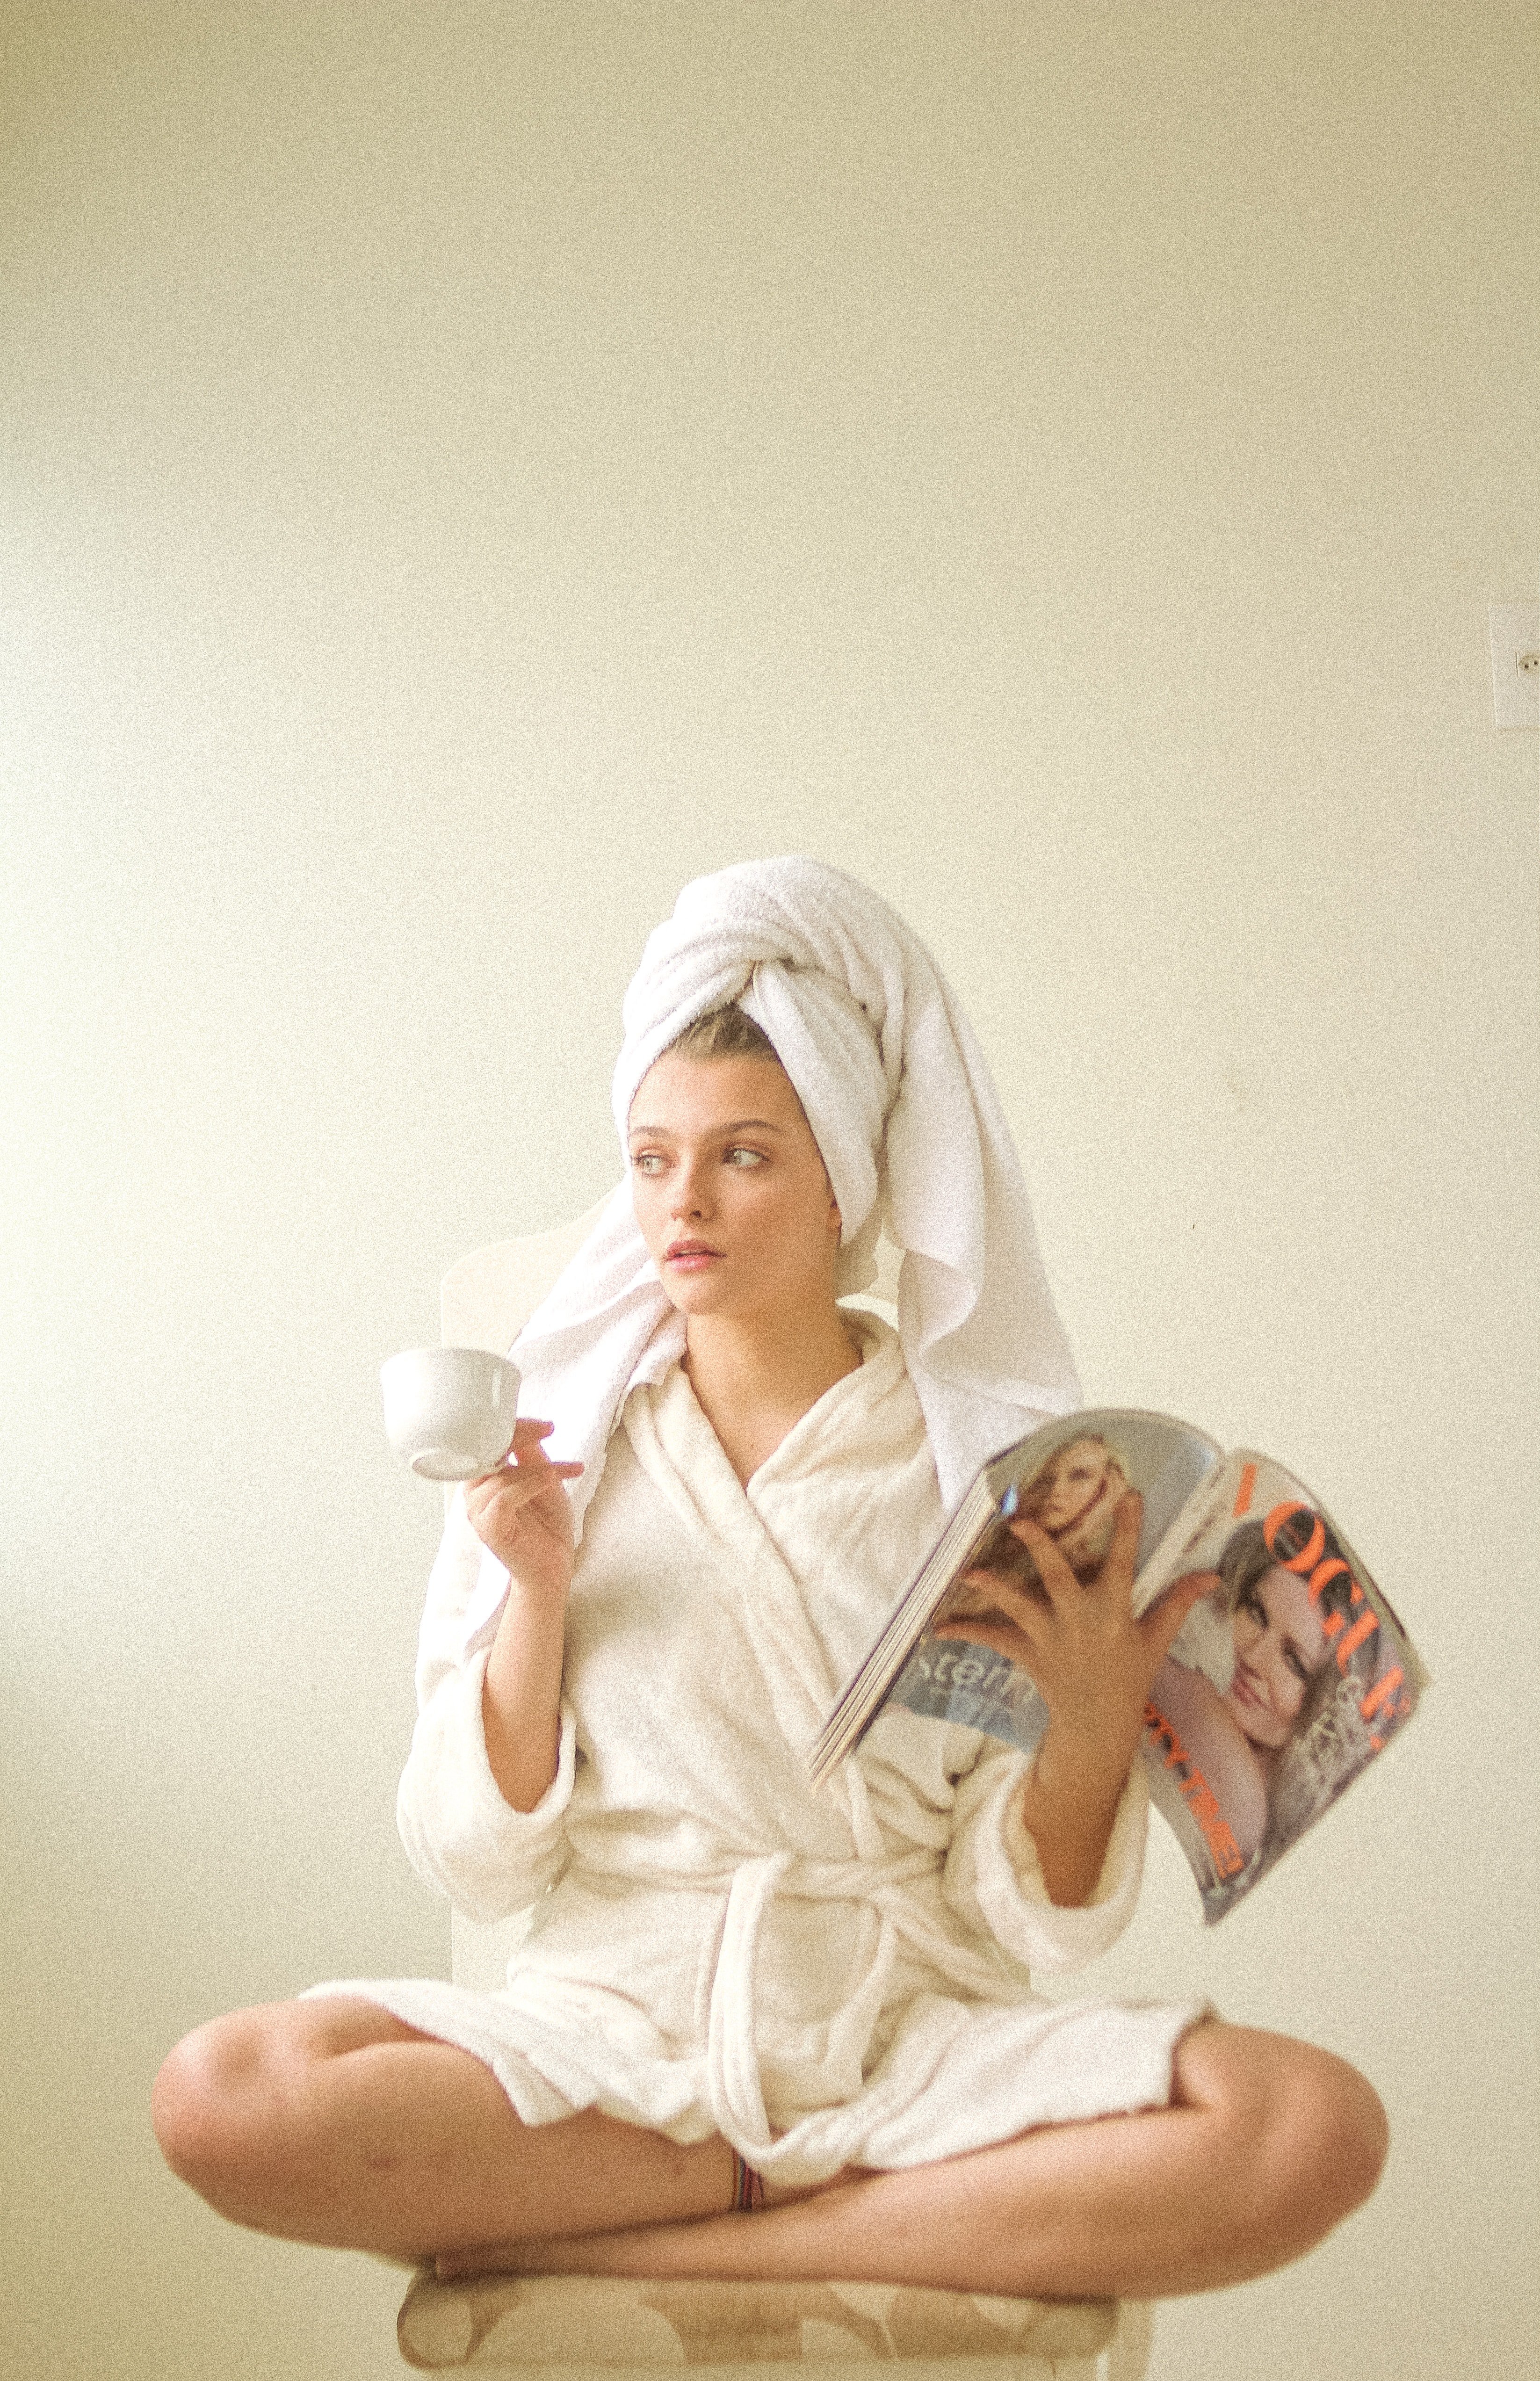 Woman in robe reading magazine | Unsplash 